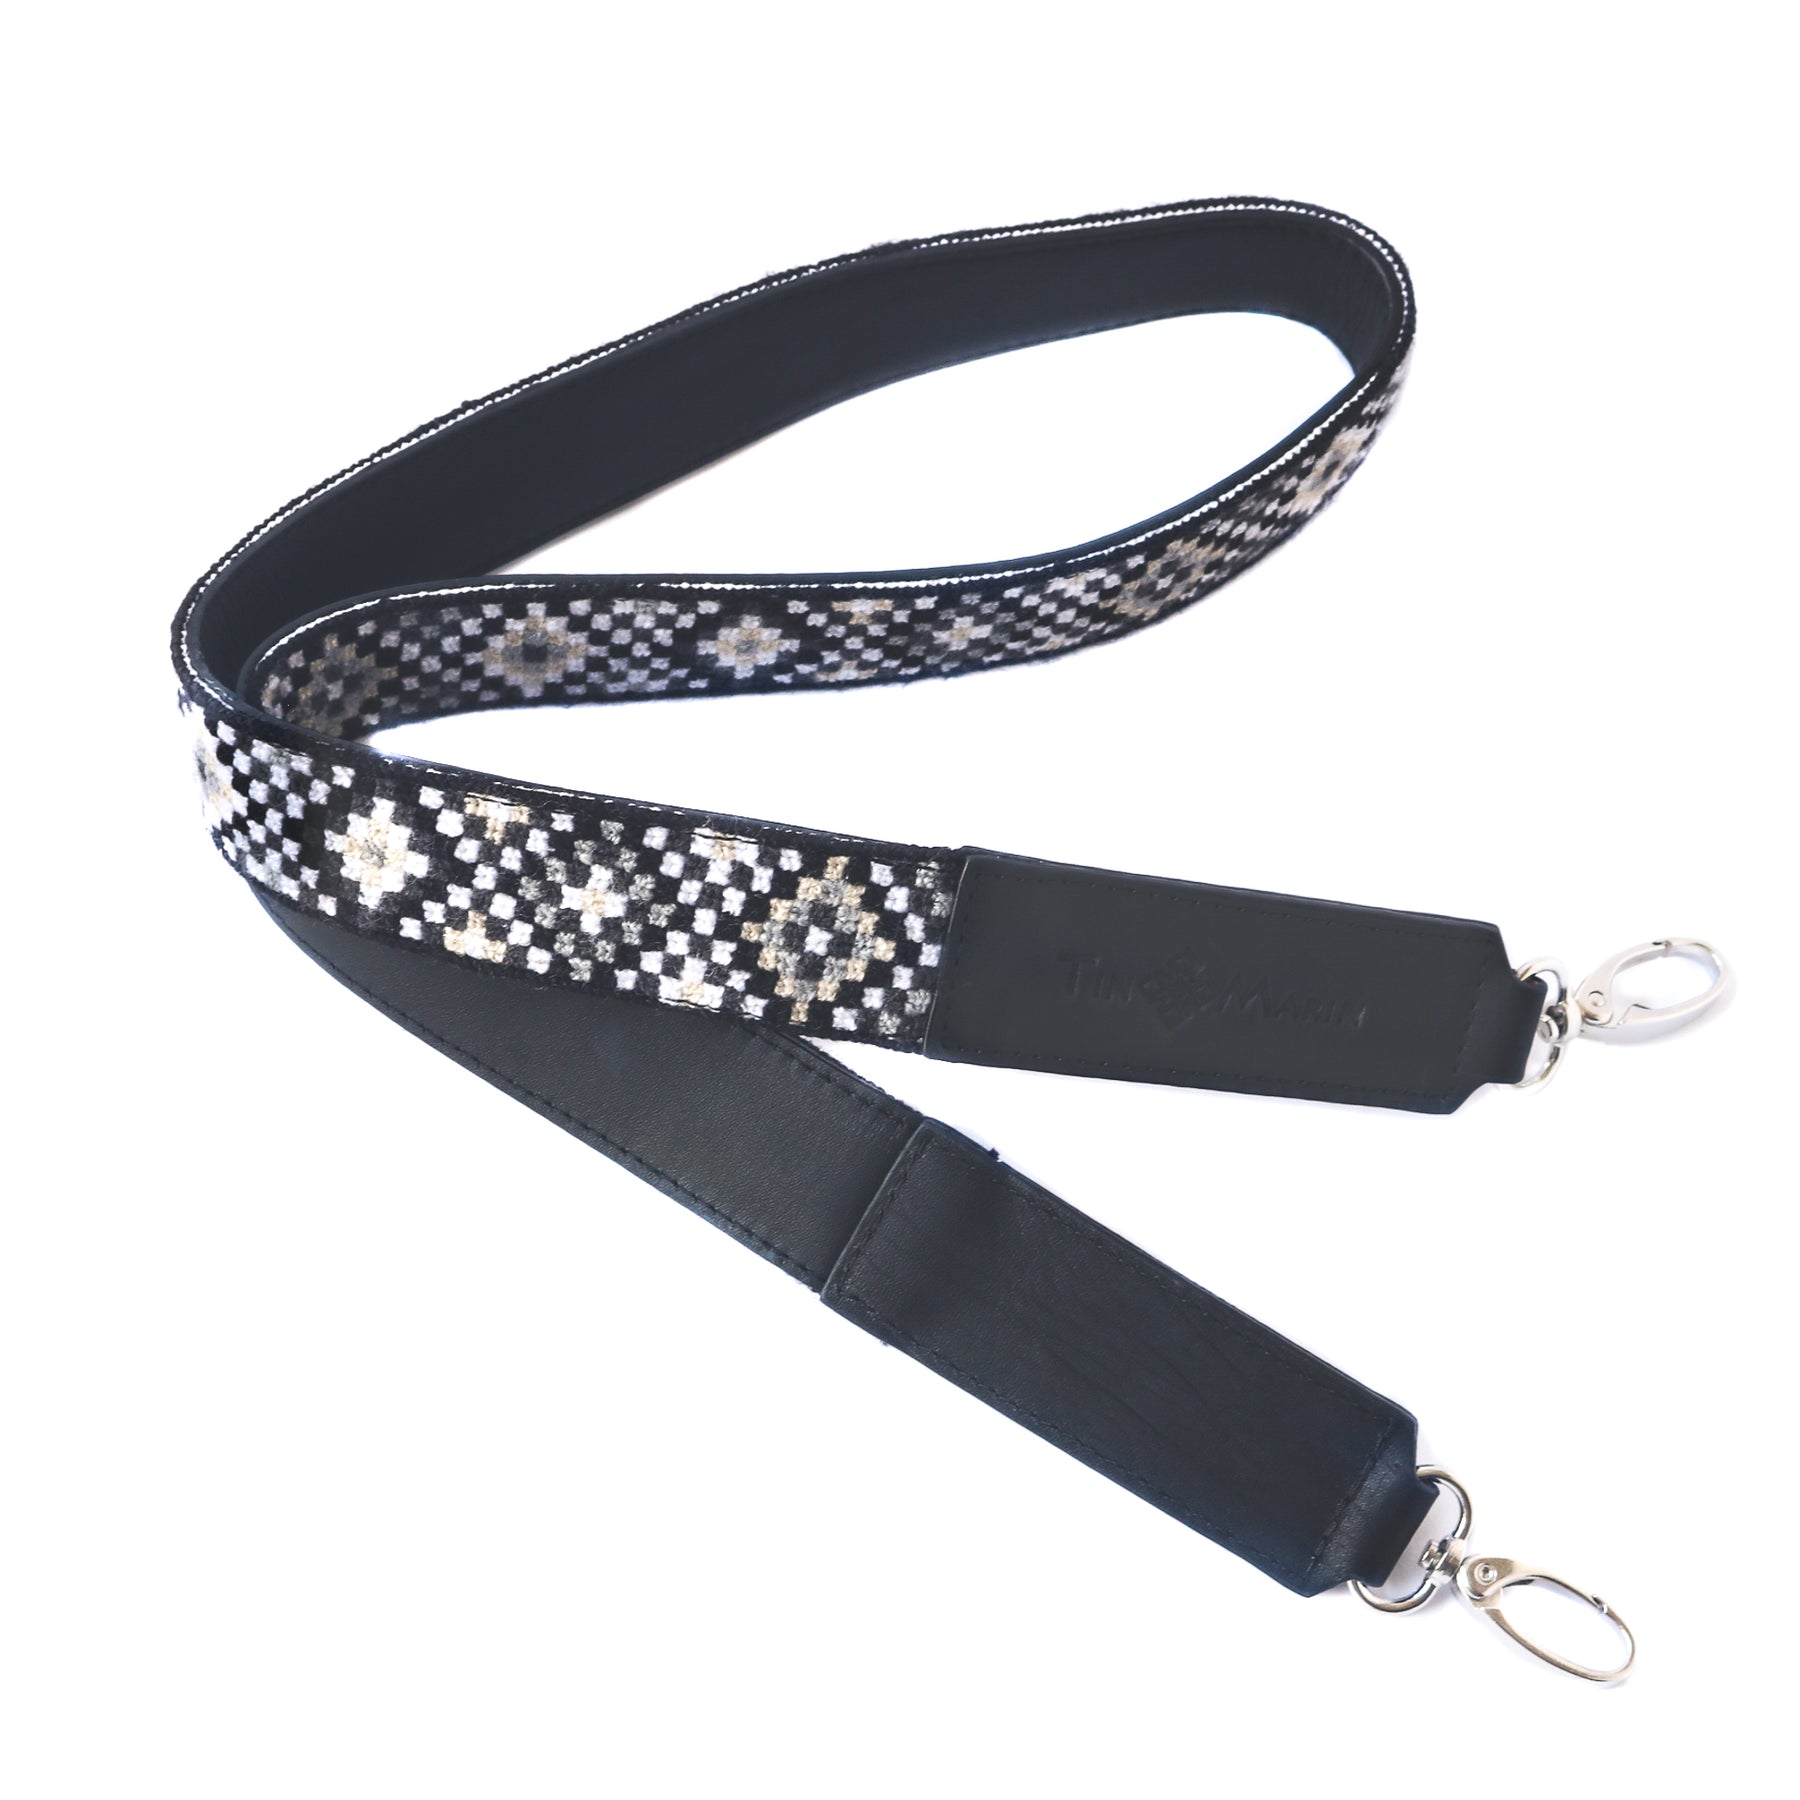 Mai Woven Bag Strap - Black & White with Black Leather | Tin Marin ...